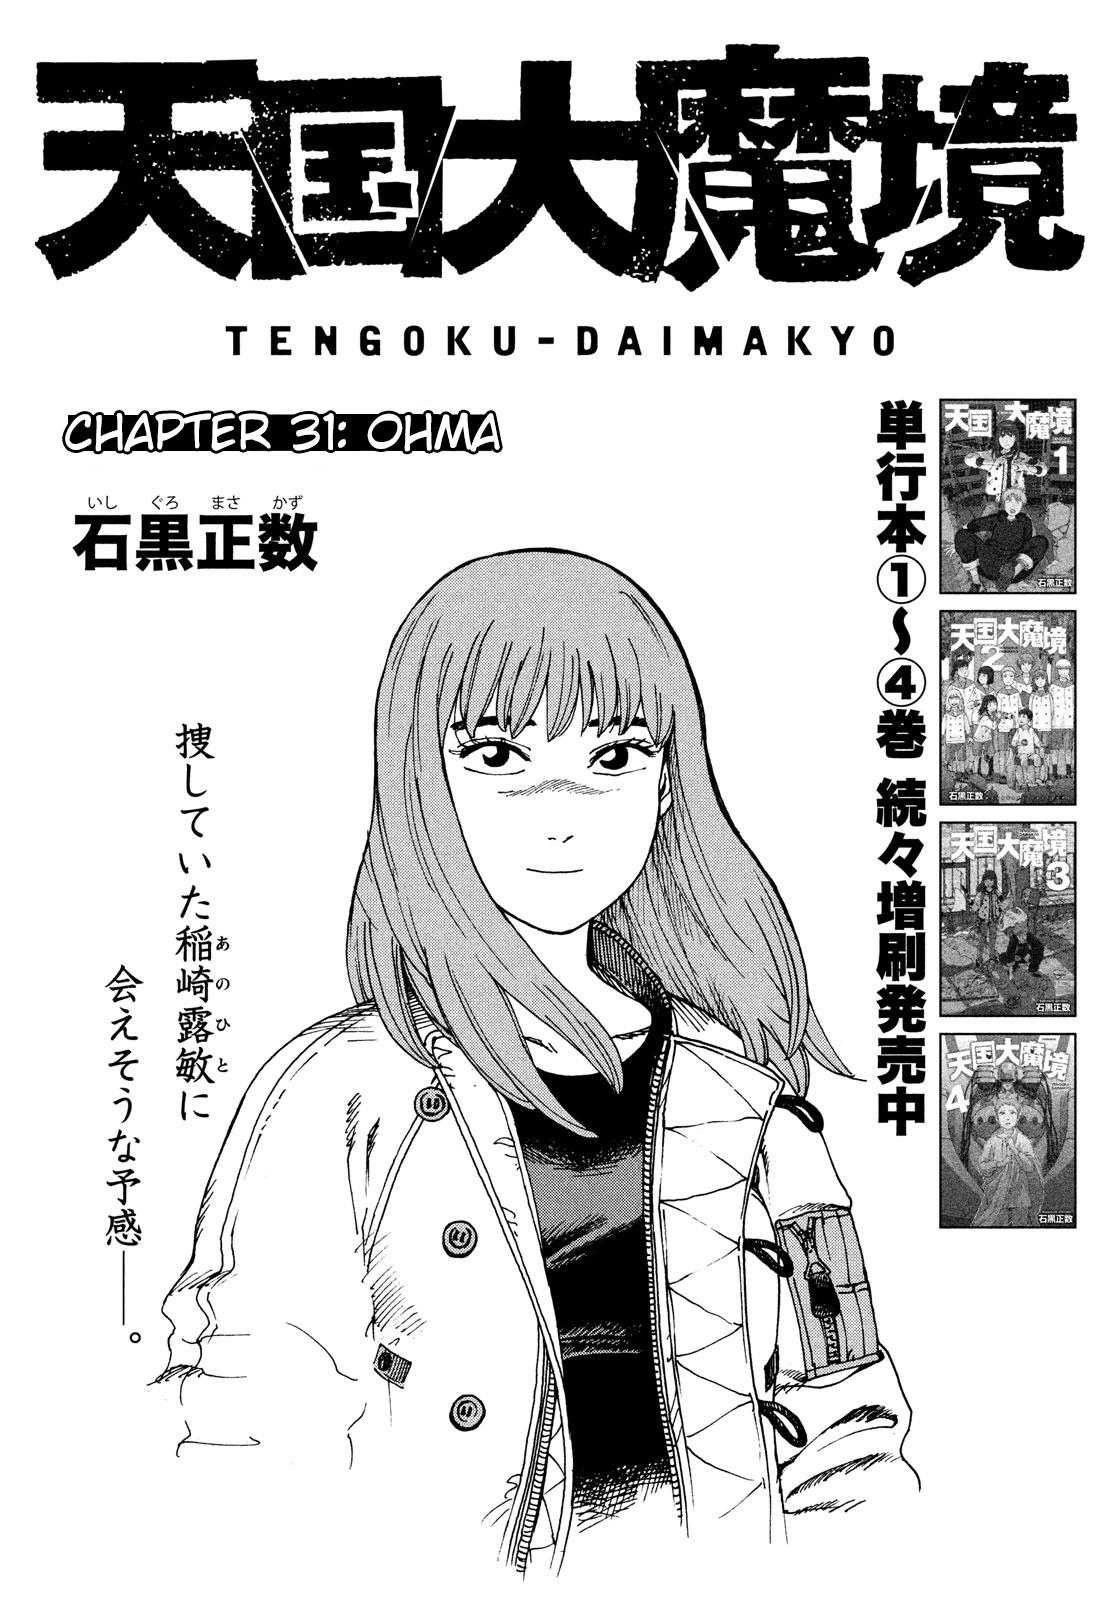 Read Tengoku Daimakyou Vol.1 Chapter 6: Taka - Manganelo